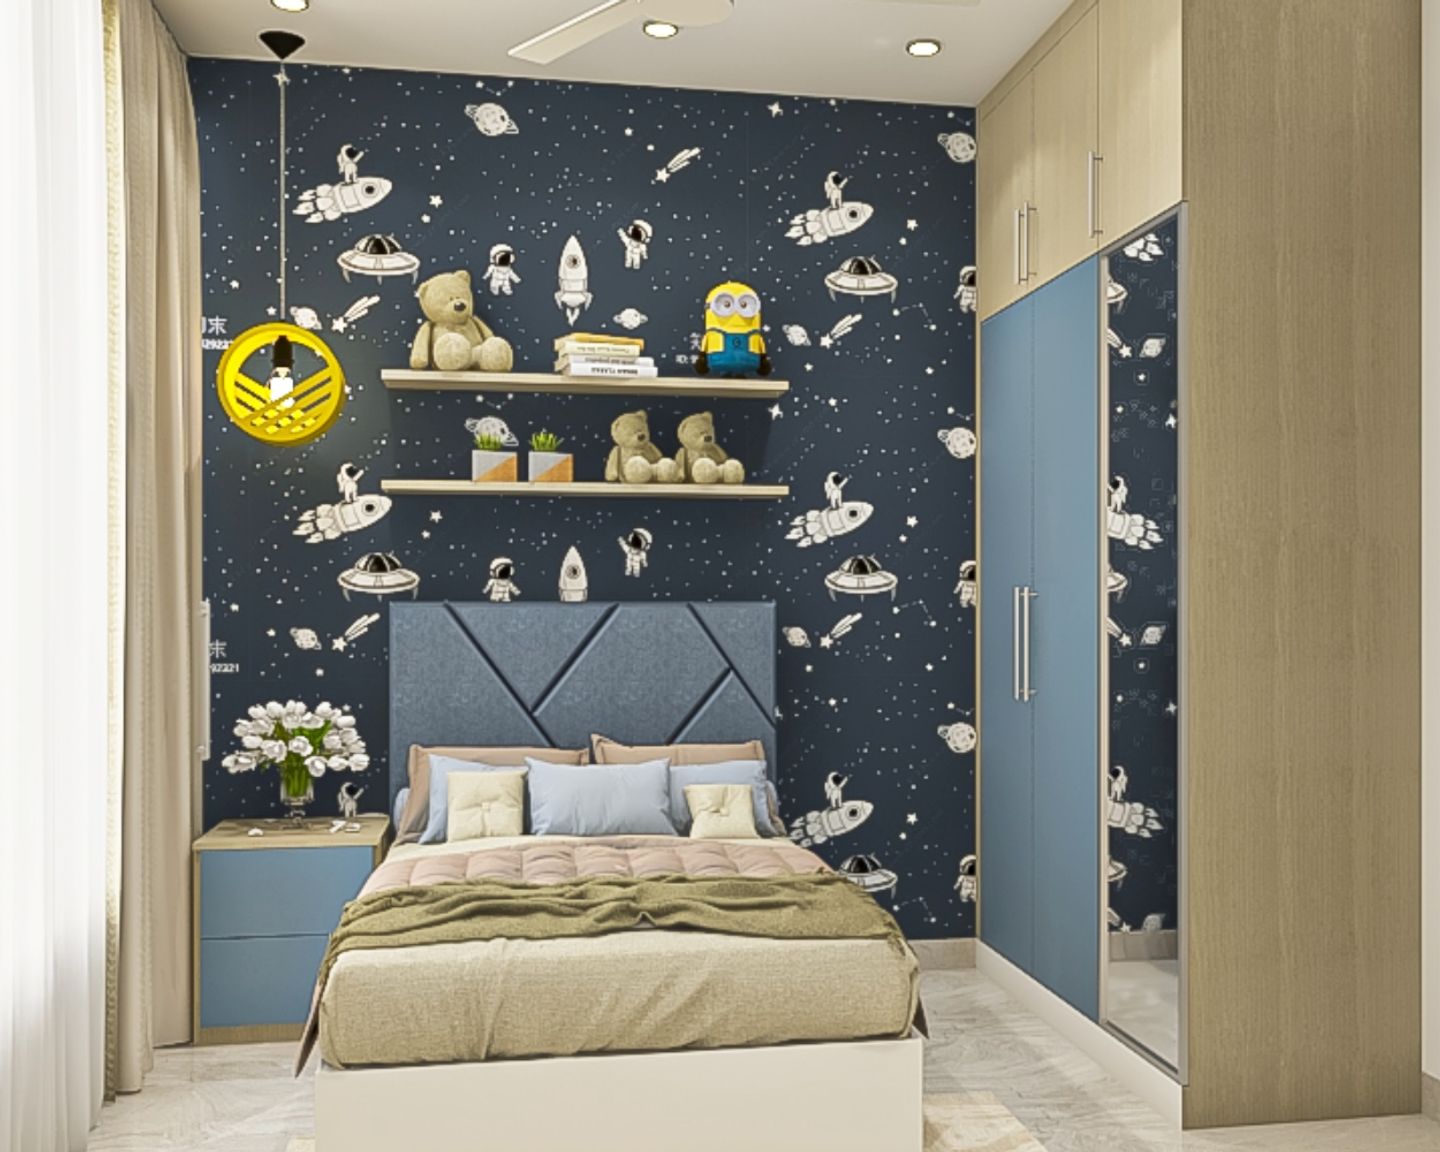 Dark Blue And White Space-Themed Bedroom Wallpaper Design - Livspace